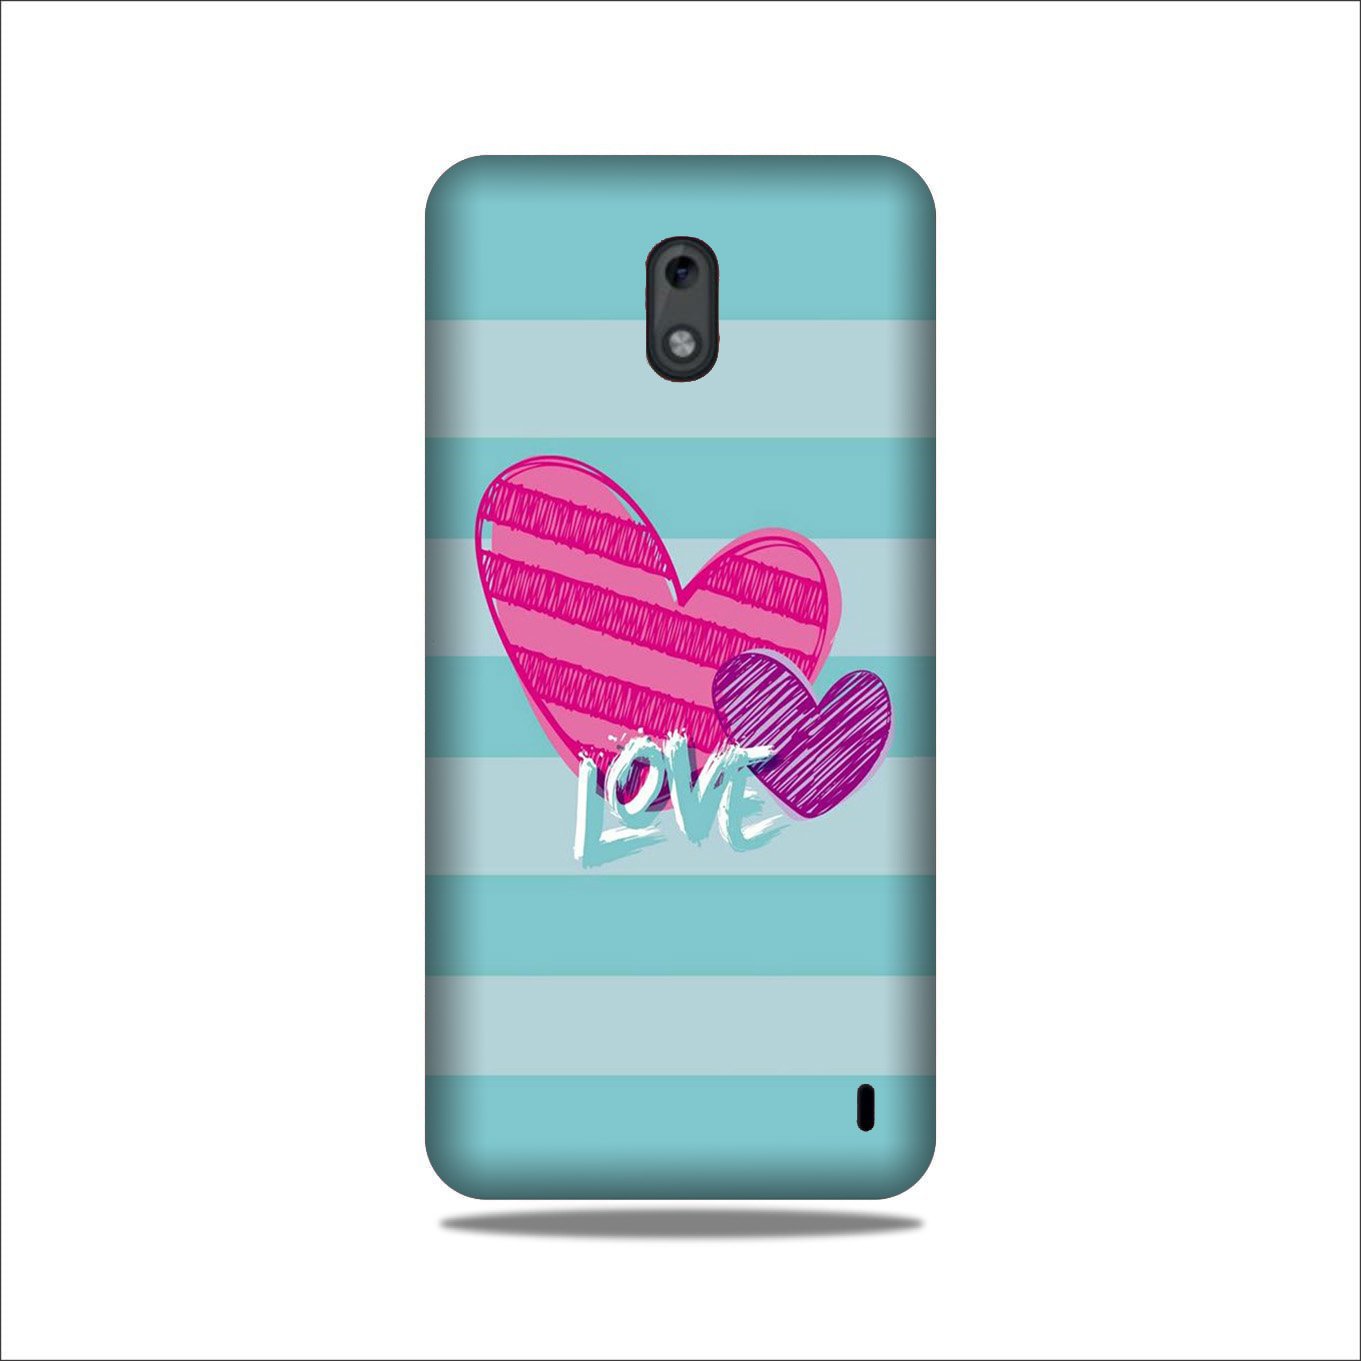 Love Case for Nokia 2.2 (Design No. 299)